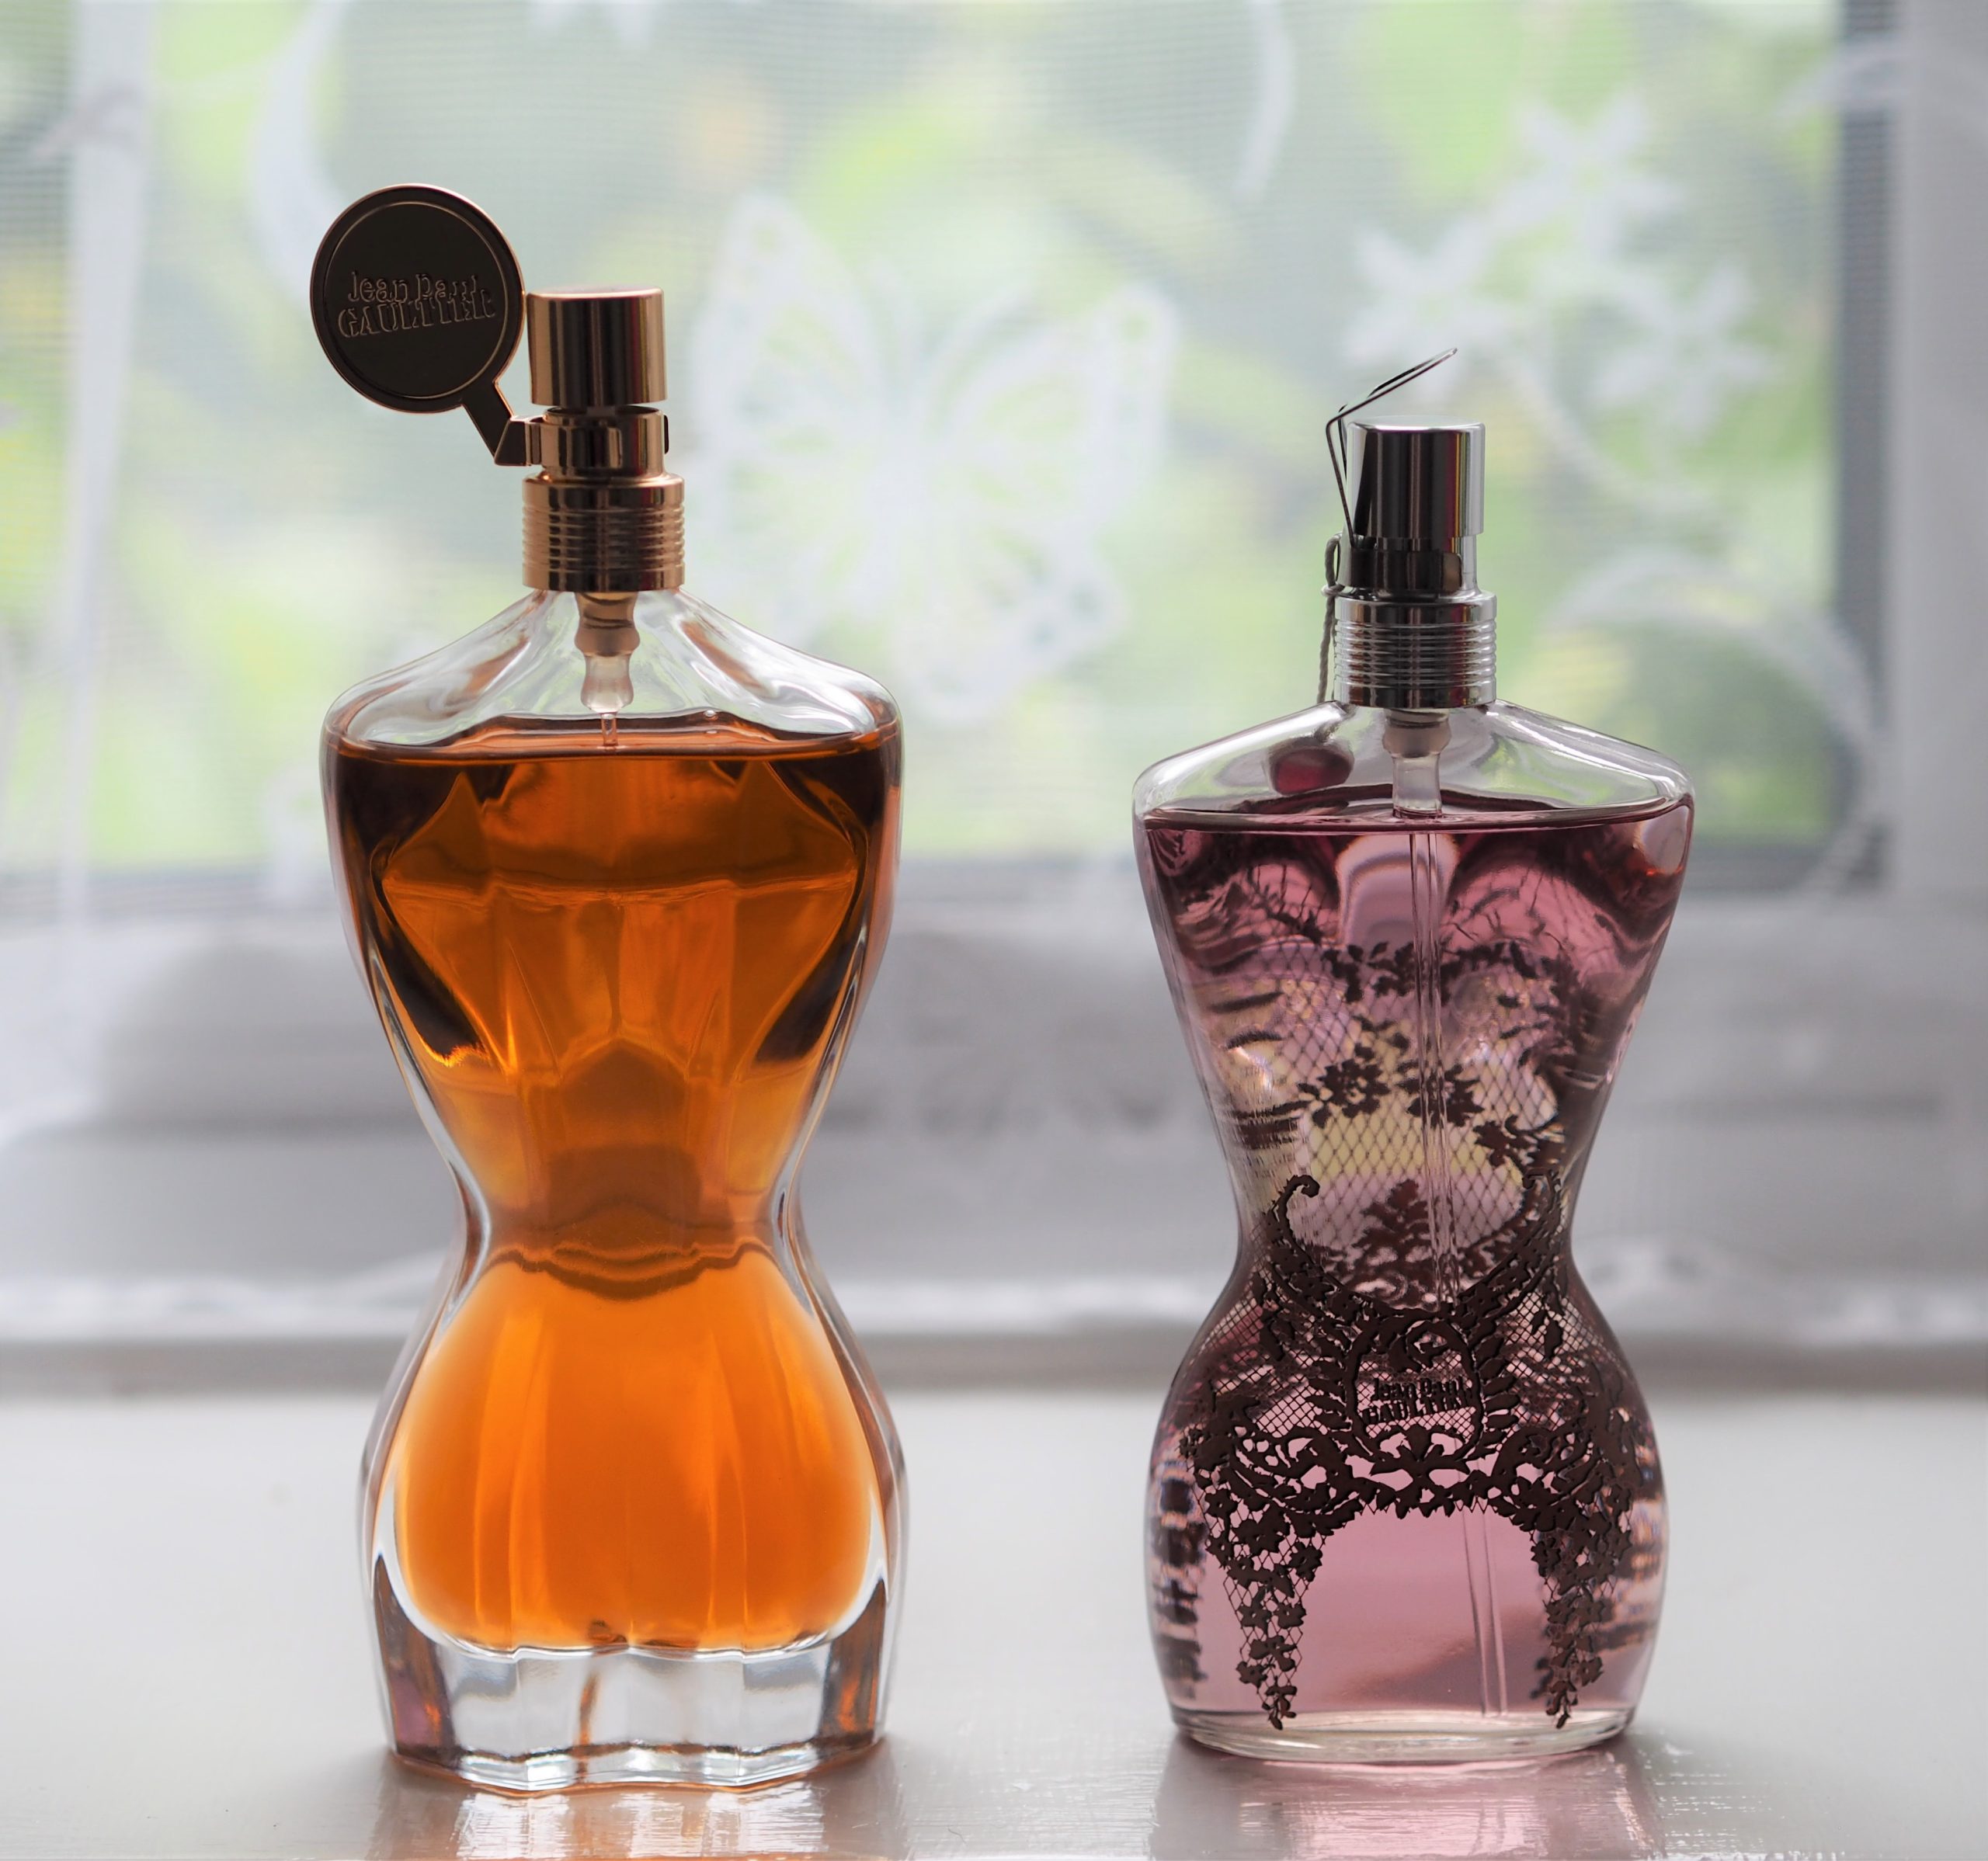 Jean Paul Gaultier Geek Original Parfum Beauty UK Essence Classique - and de